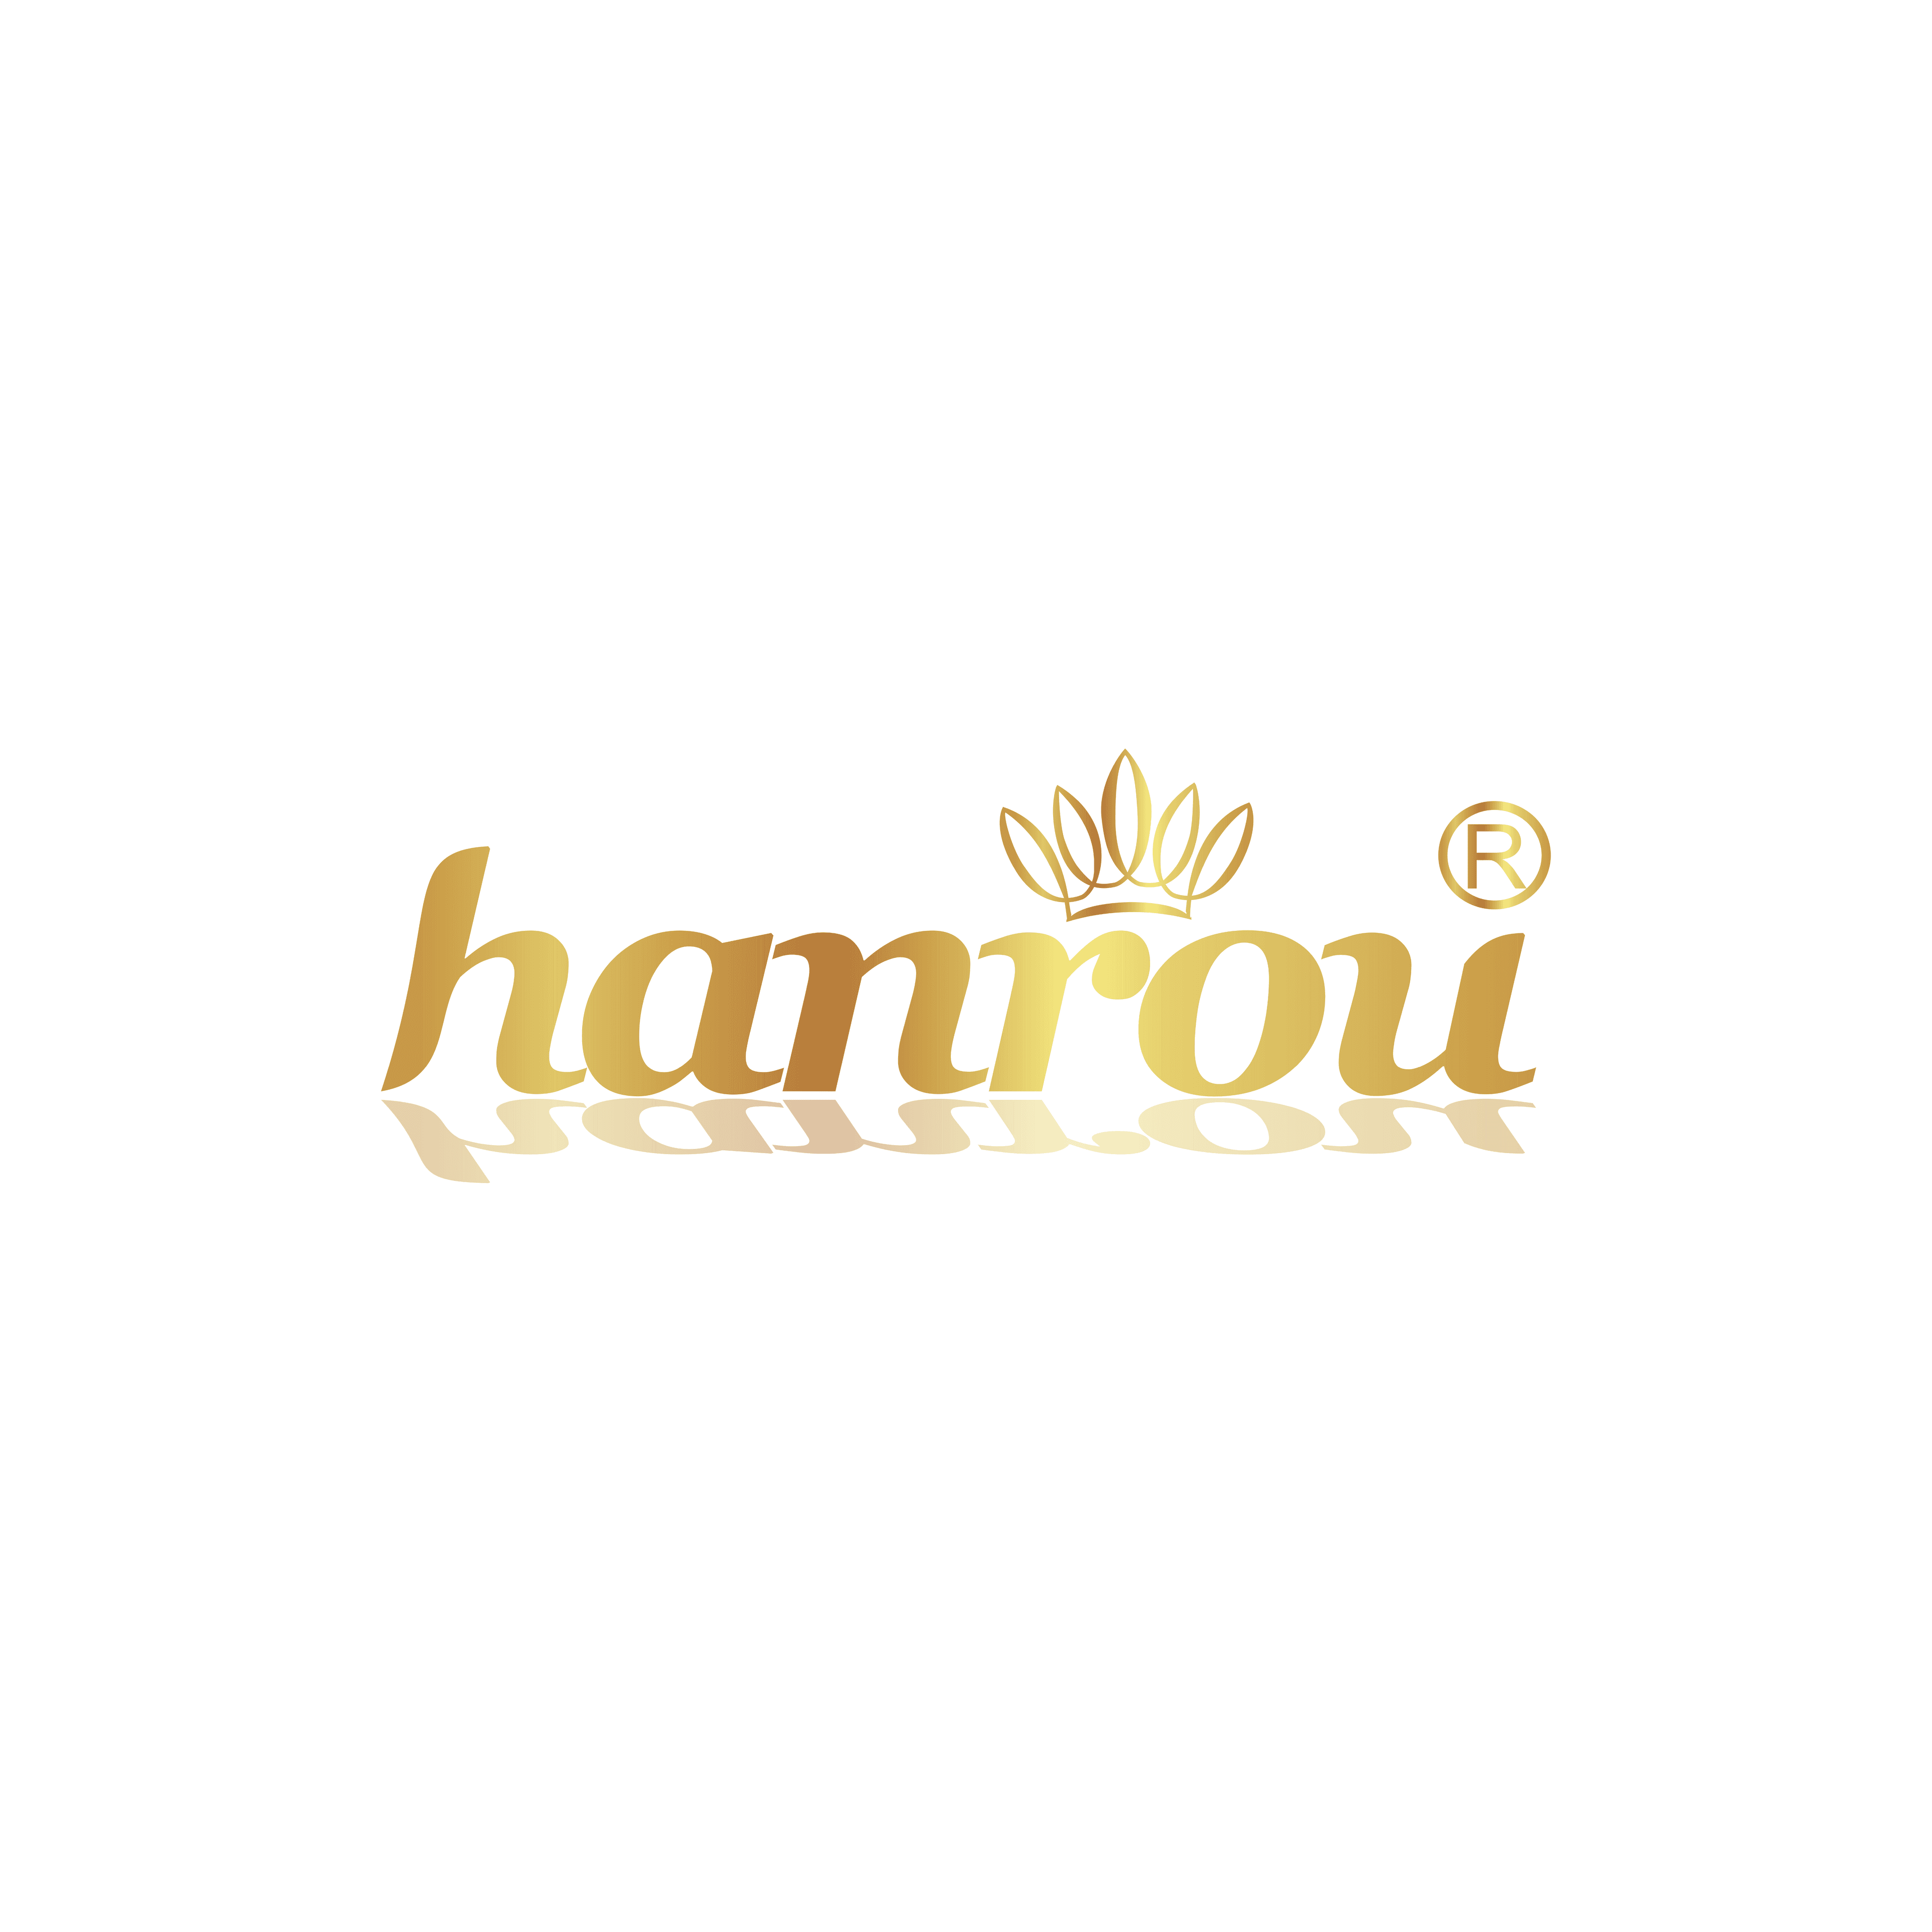 Hanrou Herbal Import Export Co., Ltd